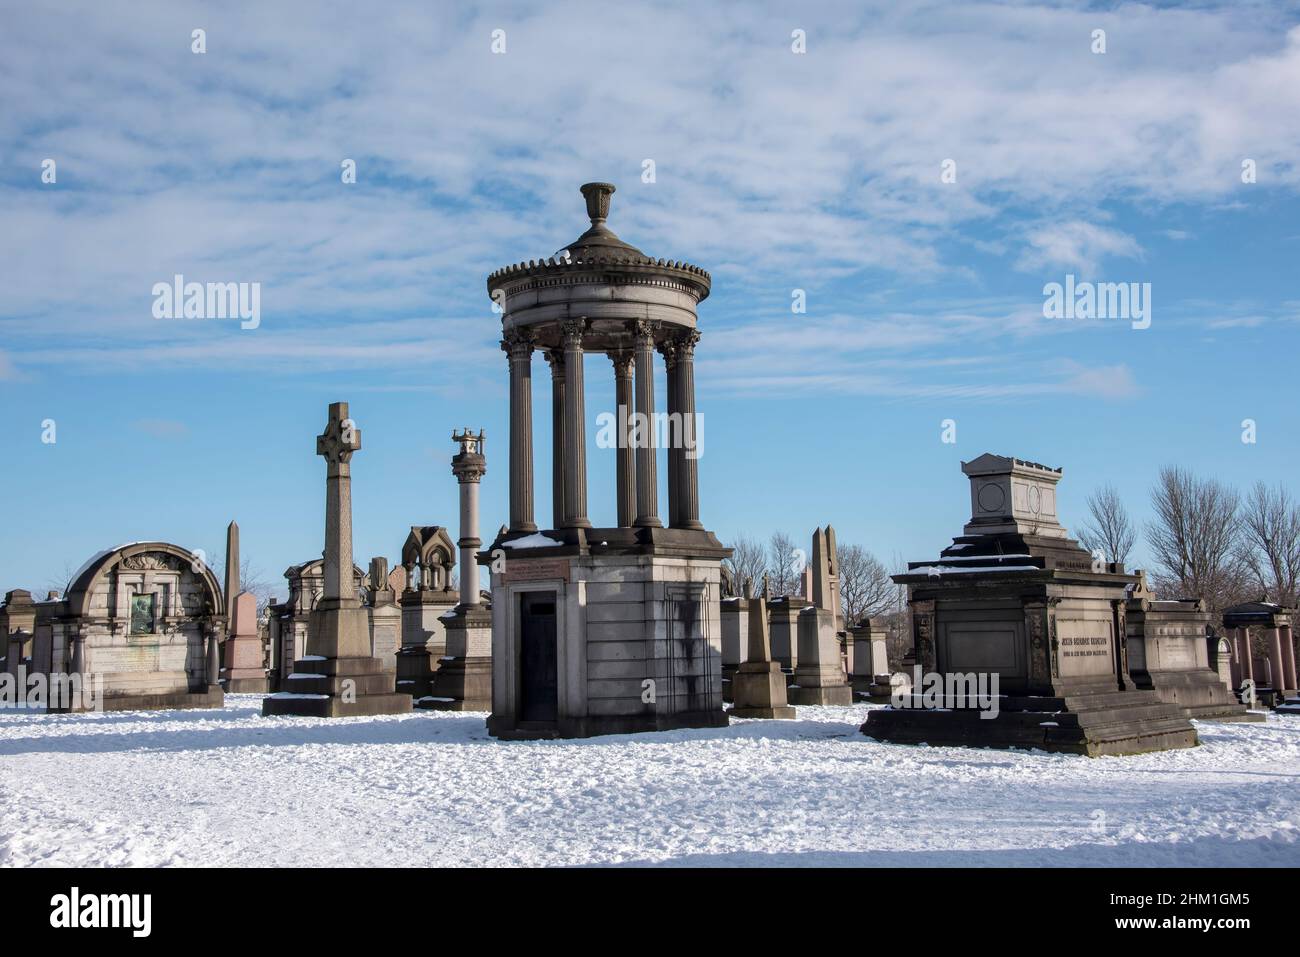 Gravestones in the snow at Necropolis Cemetry, Glasgow, Scotland. Stock Photo